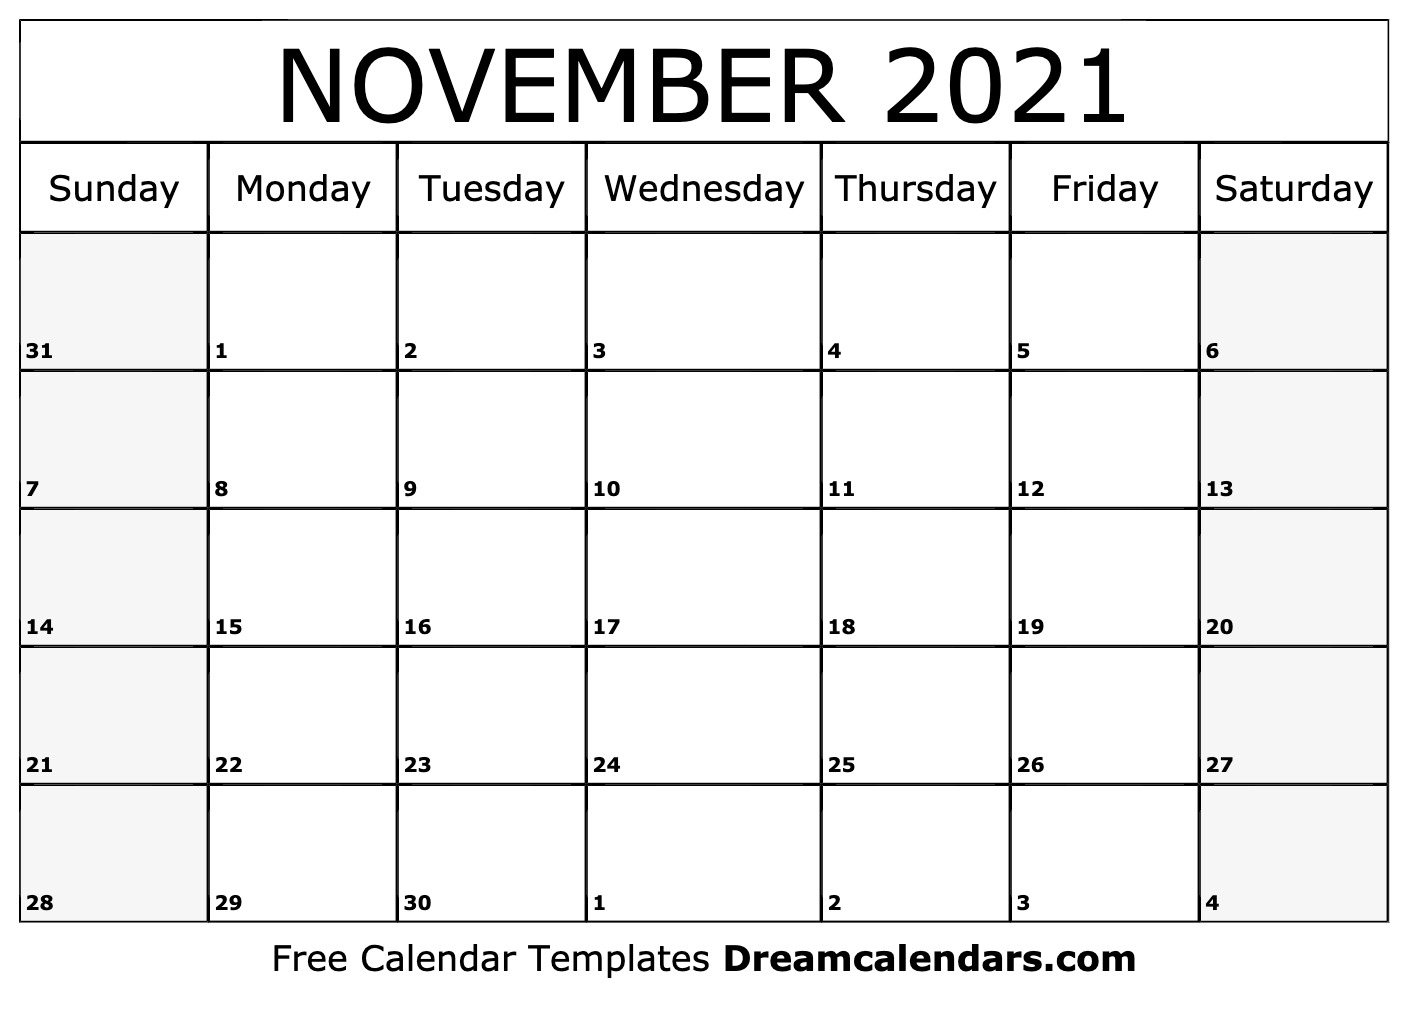 november-2021-calendar-free-blank-printable-with-holidays